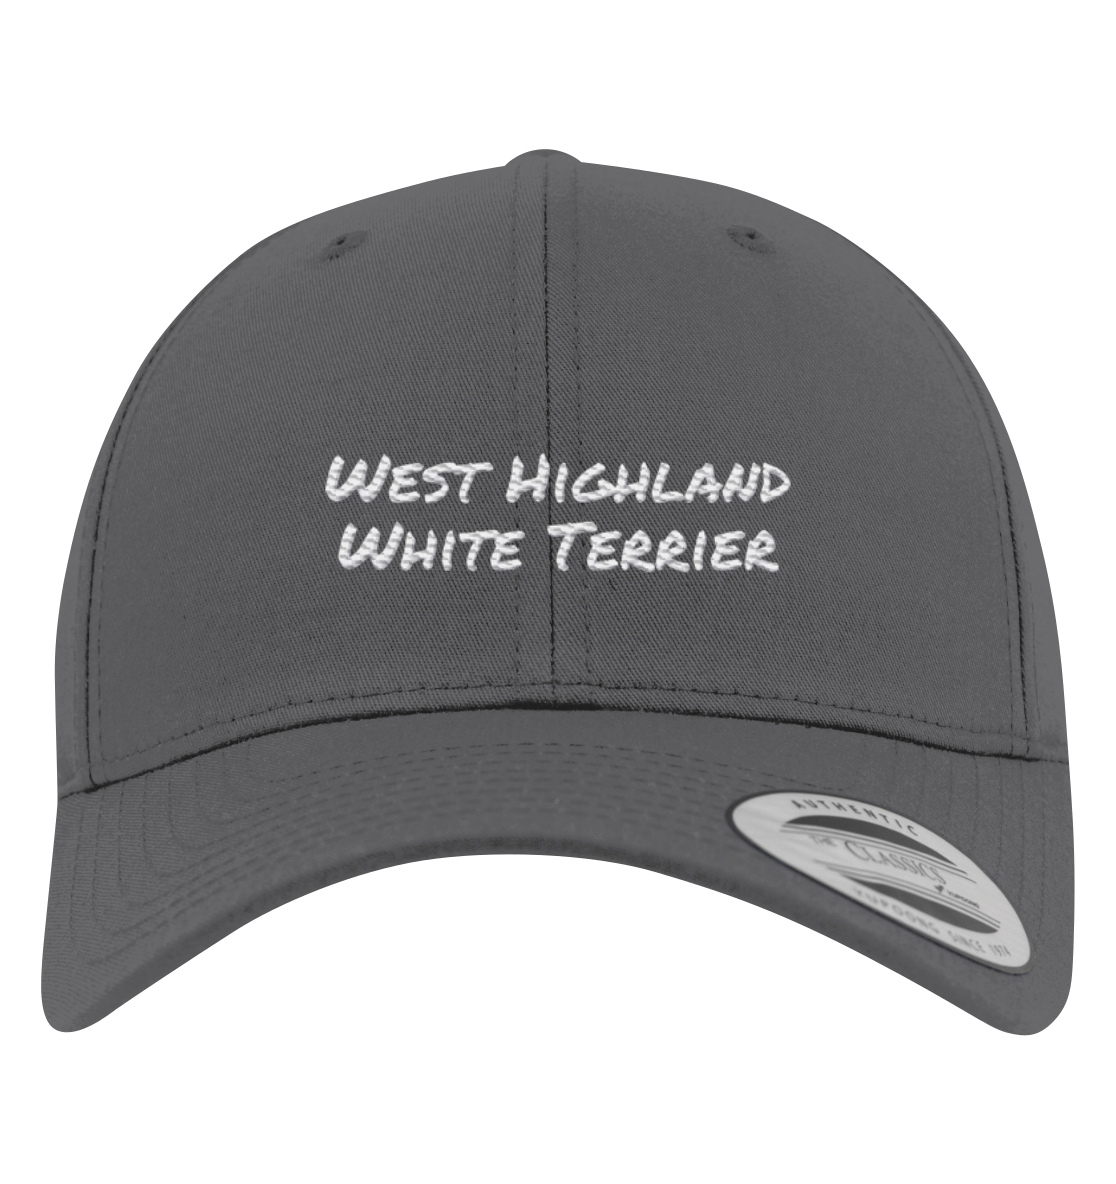 West Highland White Terrier - Premium Baseball Cap